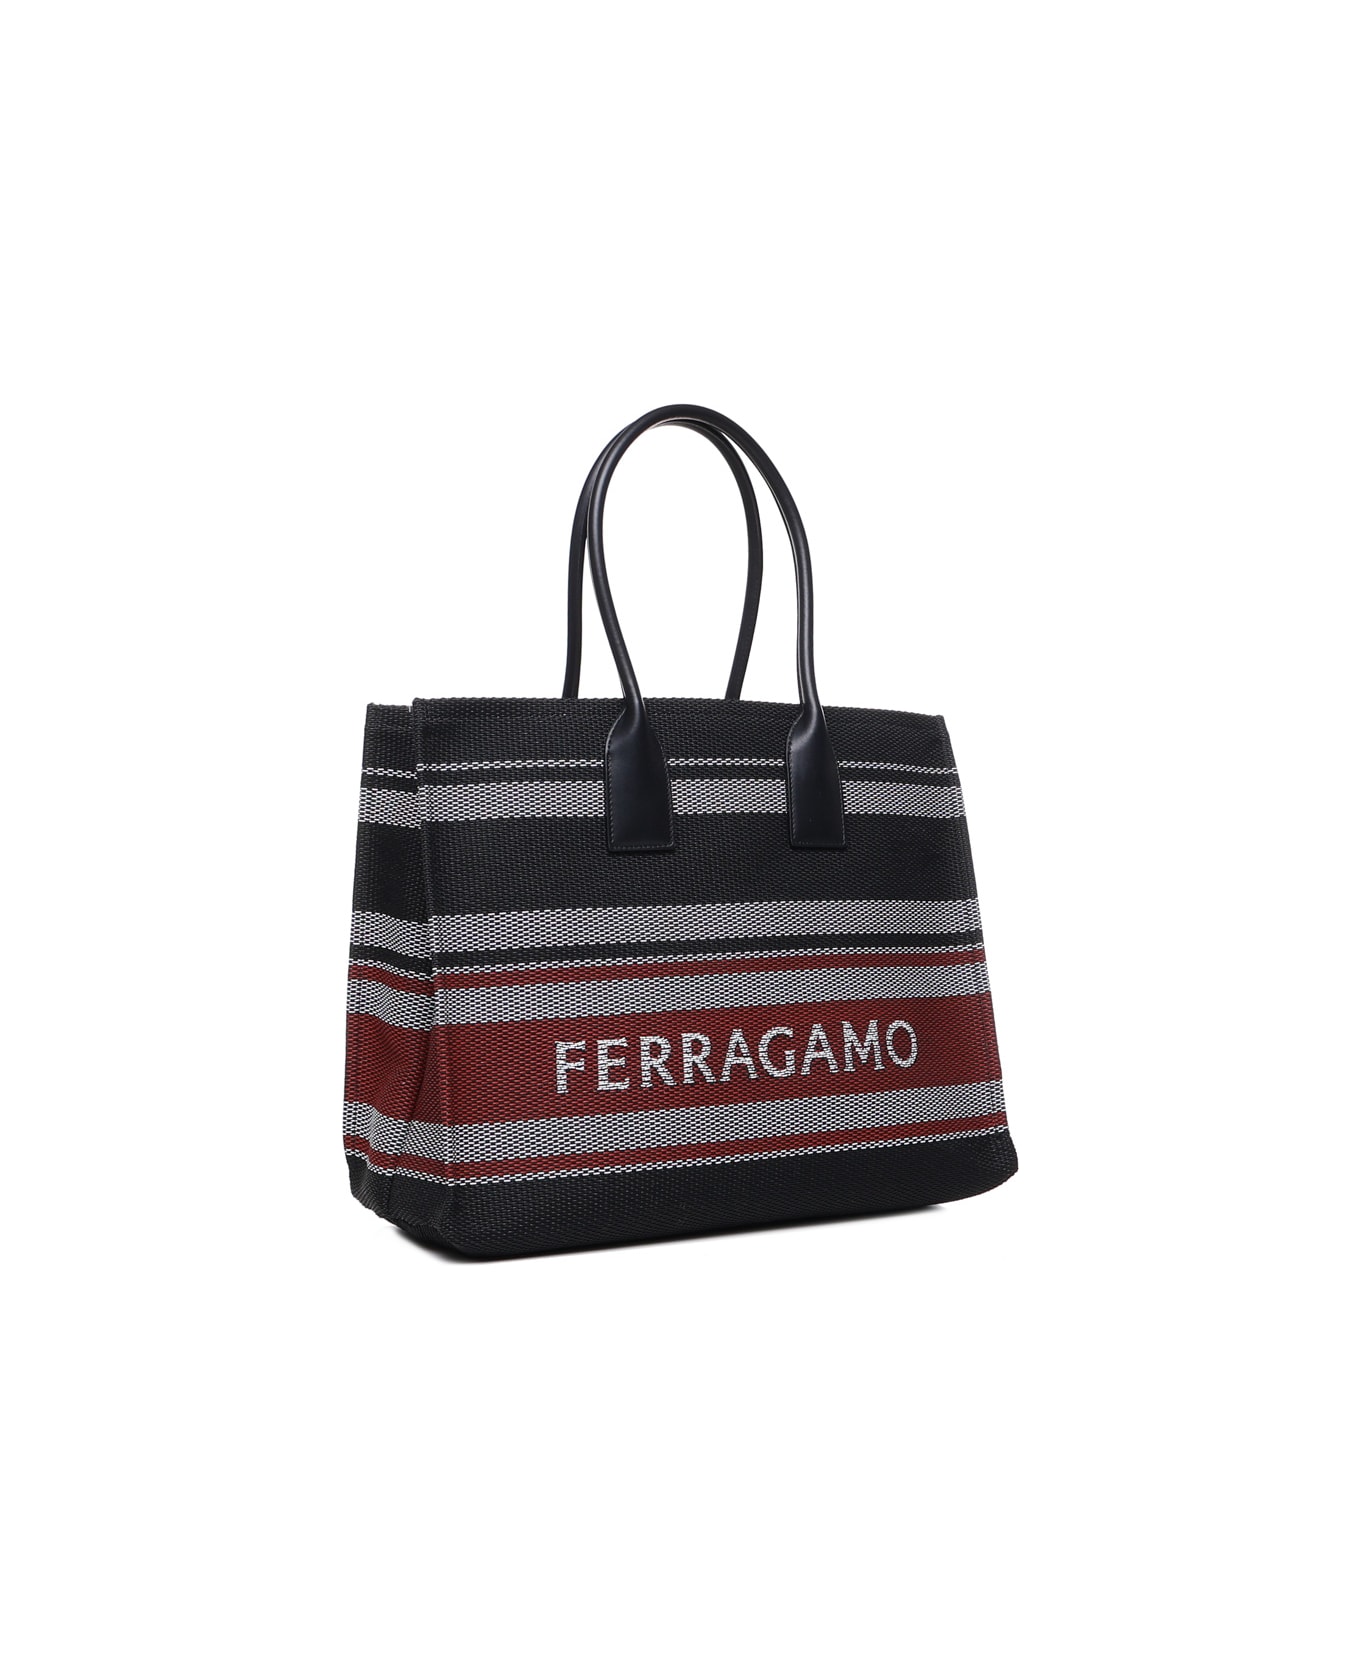 Ferragamo Signature Tote Bag - Black トートバッグ